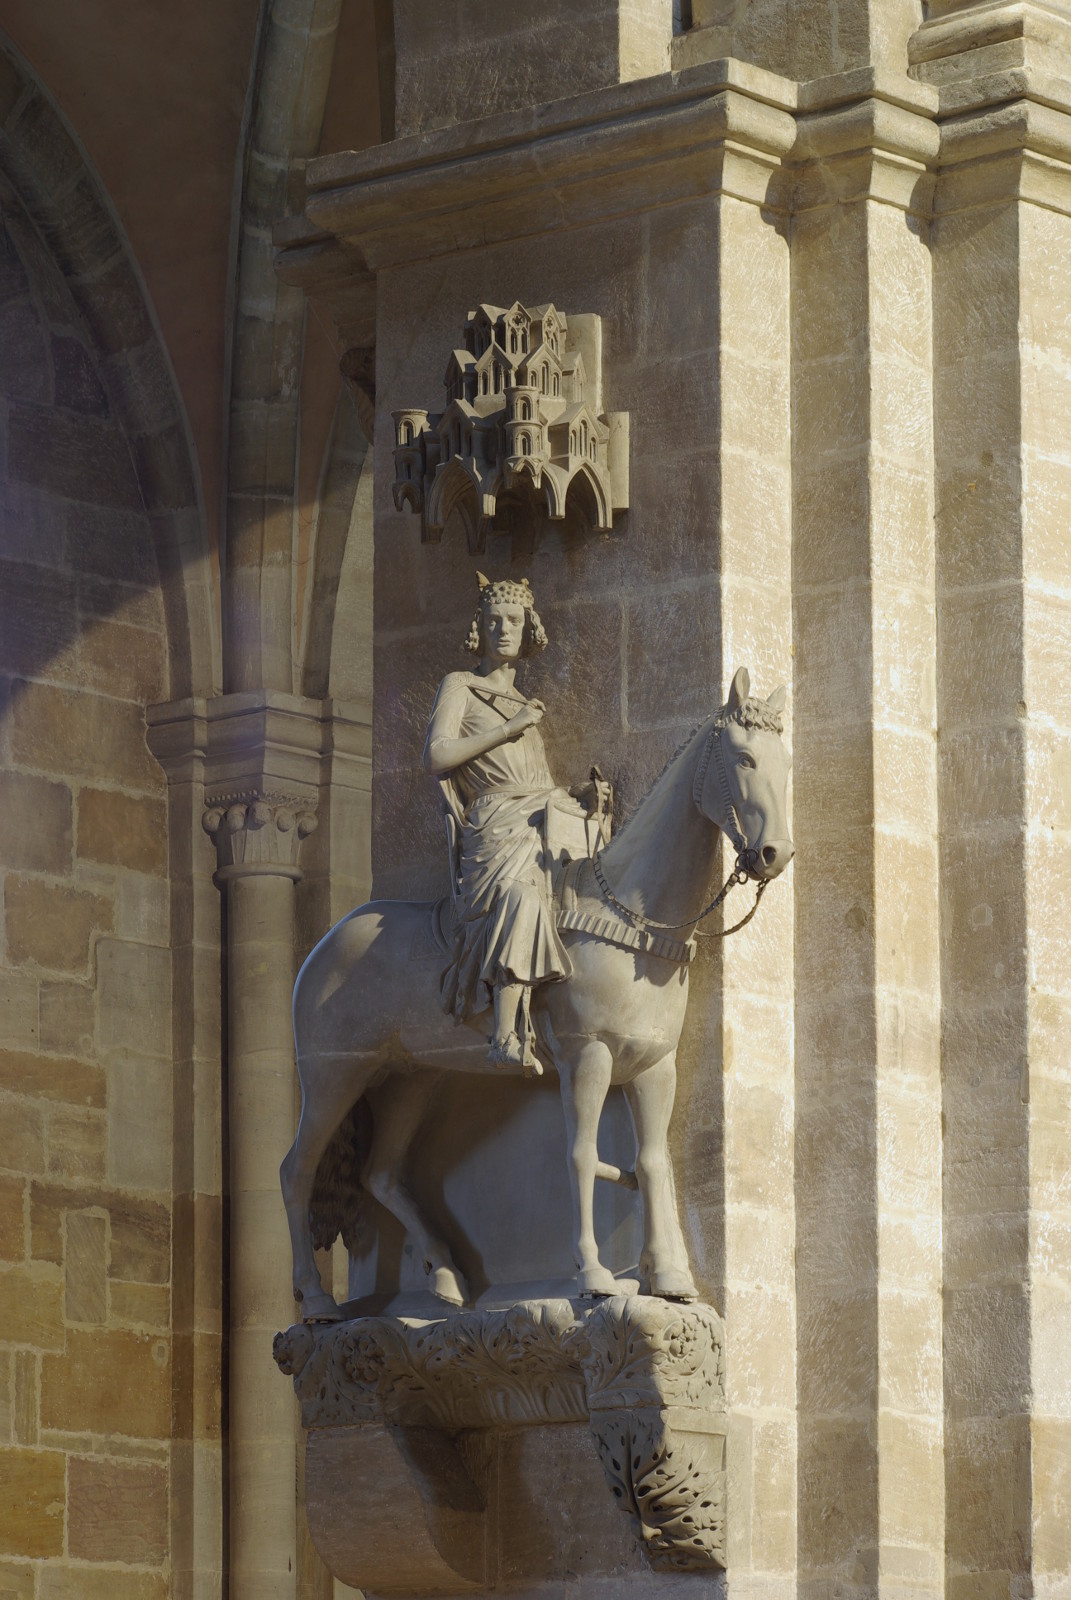 erste Hälfte des 13. Jahrhunderts, Sandstein, im Innenraum des Bamberger Doms.<br>
Quelle: <a href="https://commons.wikimedia.org/wiki/File:Bamberger_Reiter_BW_2.JPG">User:Berthold Werner / Wikimedia Commons</a>
<br>Lizenz: Public Domain
